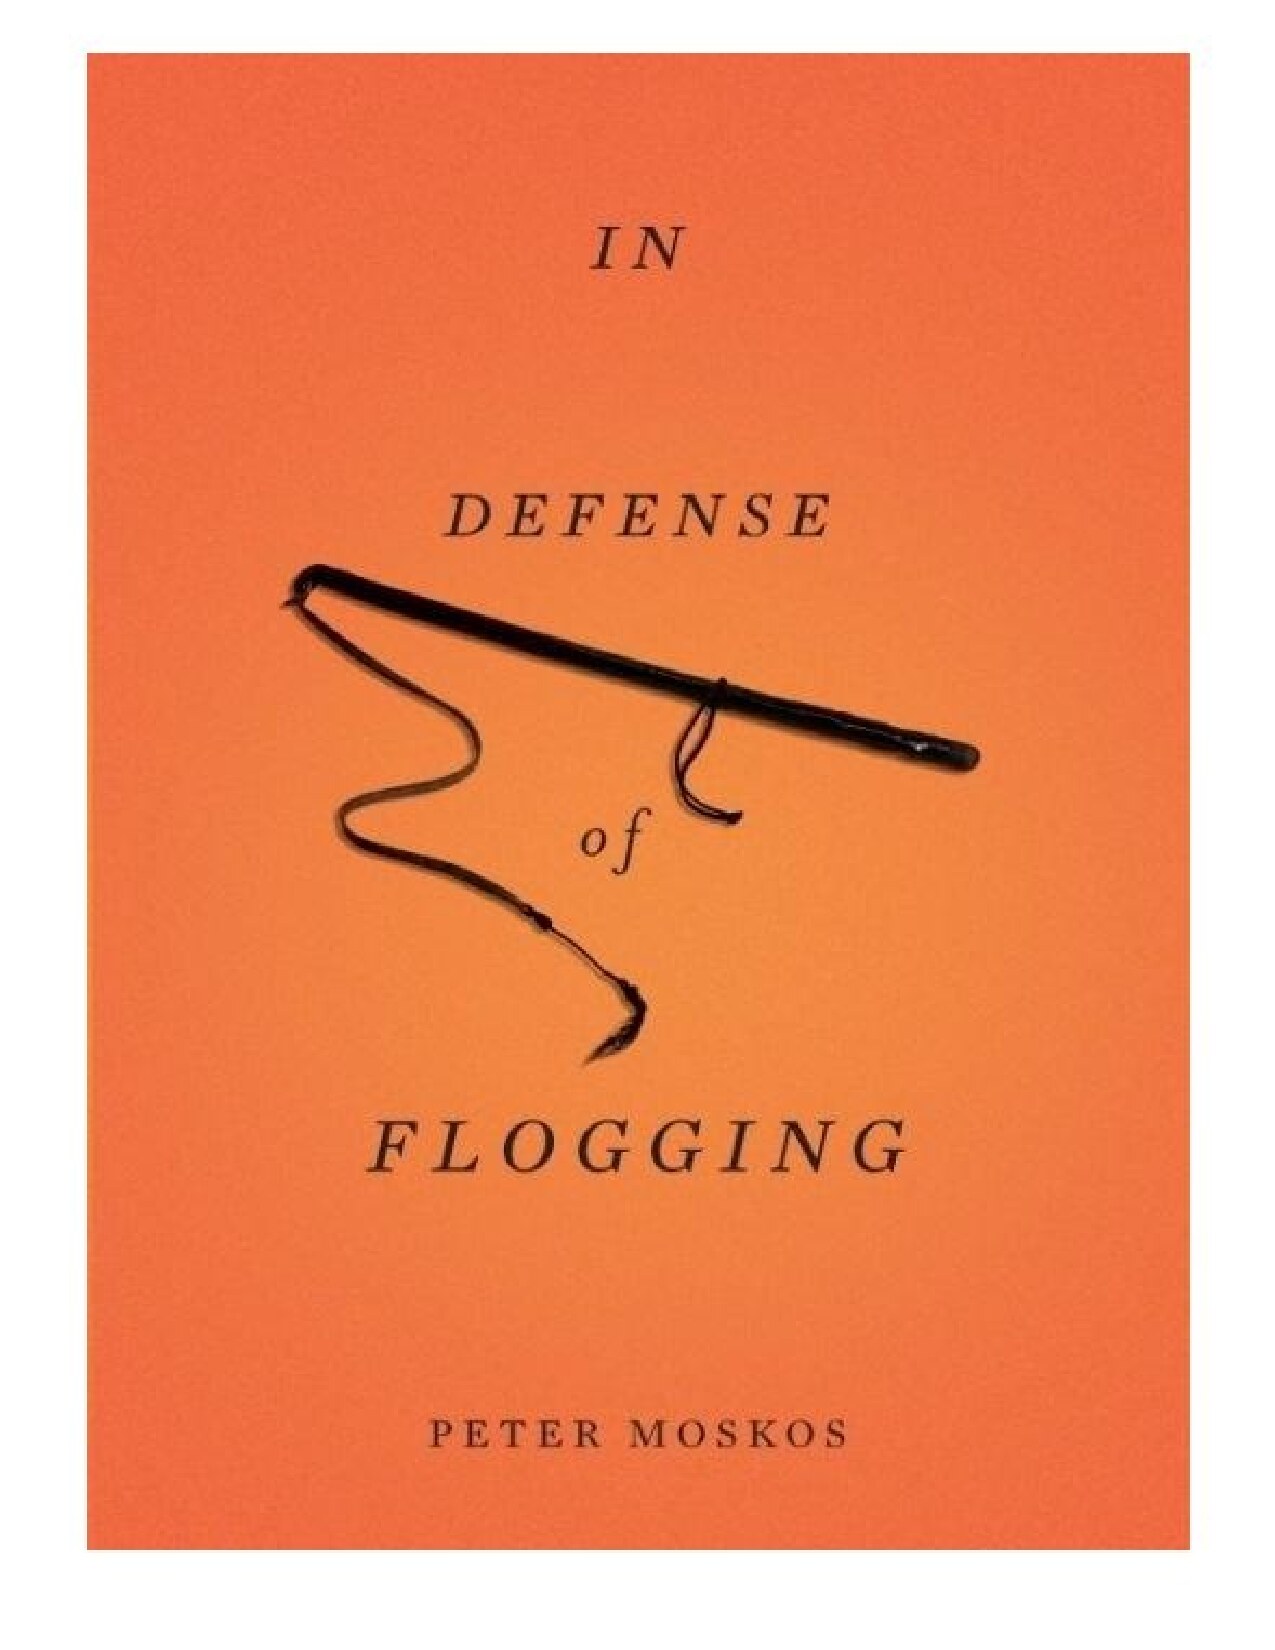 In Defense of Flogging